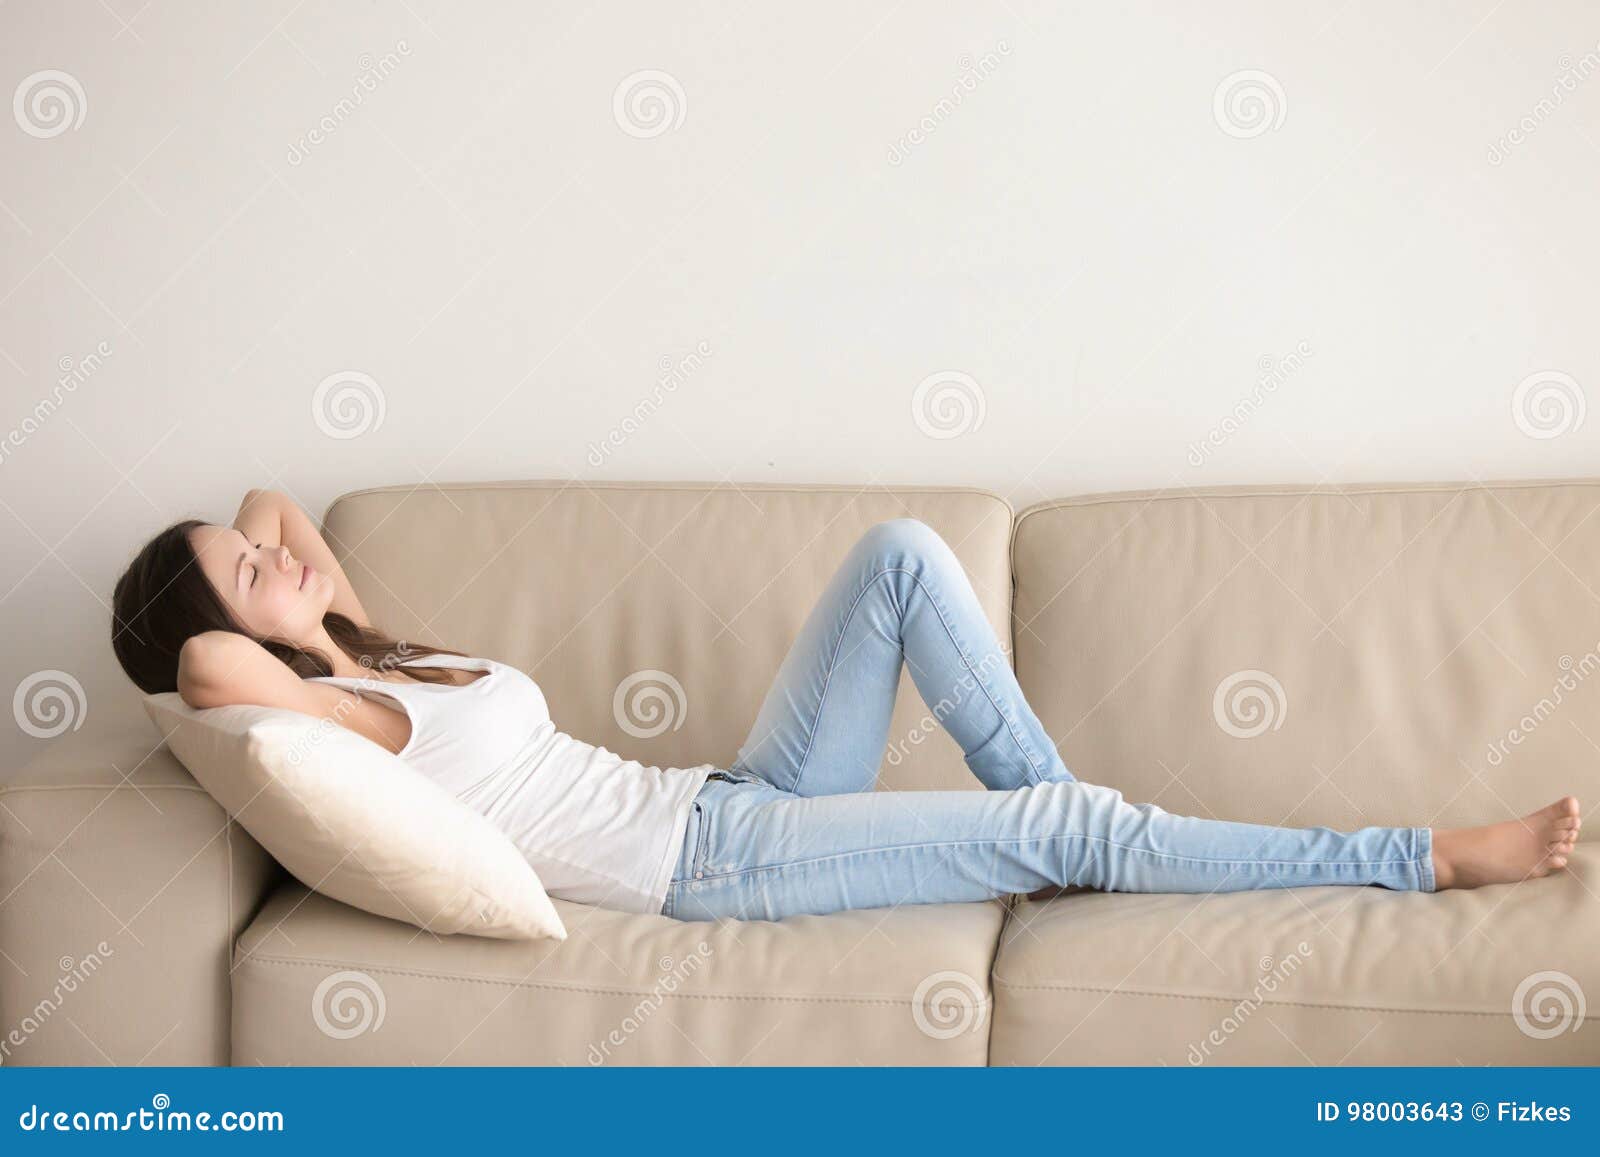 deficit react meat Νέα γυναίκα που βρίσκεται στον καναπέ, που χαλαρώνει με τα χέρια πίσω από  το κεφάλι Στοκ Εικόνα - εικόνα από lifestyle: 98003643